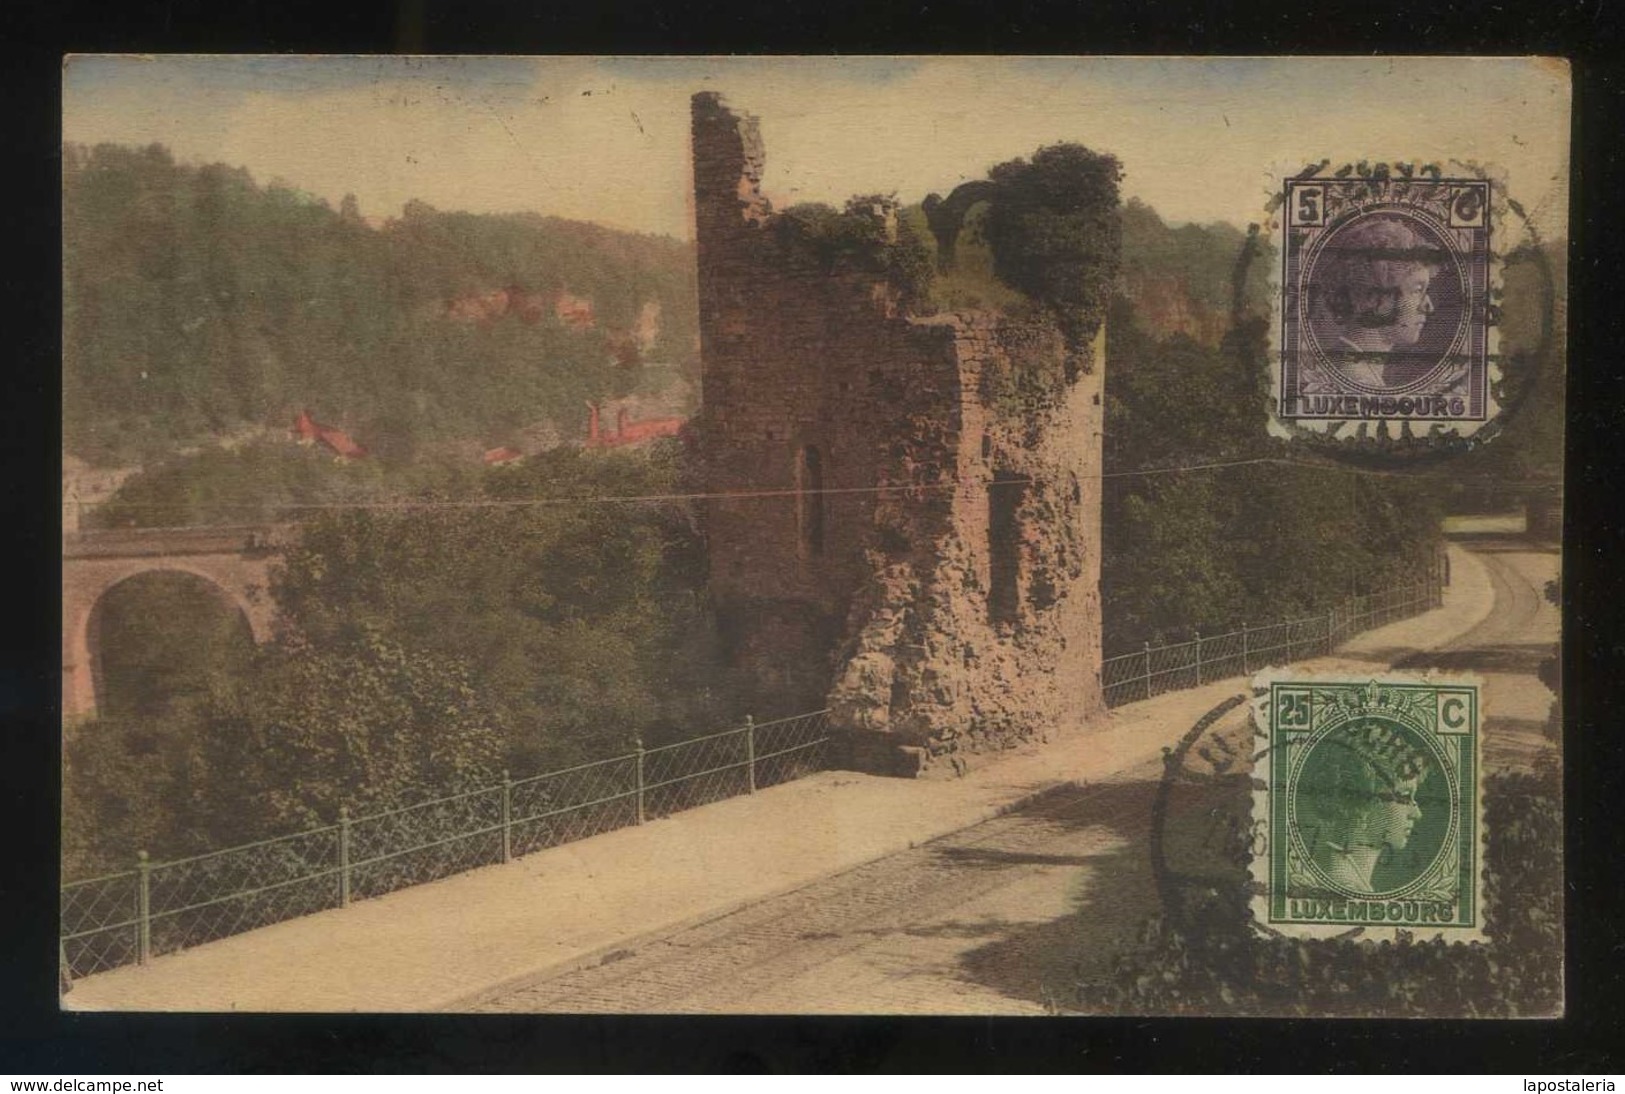 Luxemburgo. *Descente De Clausen. Ruine Du Château...* Ed. P.C.S. Circulada 1927. - Luxemburgo - Ciudad